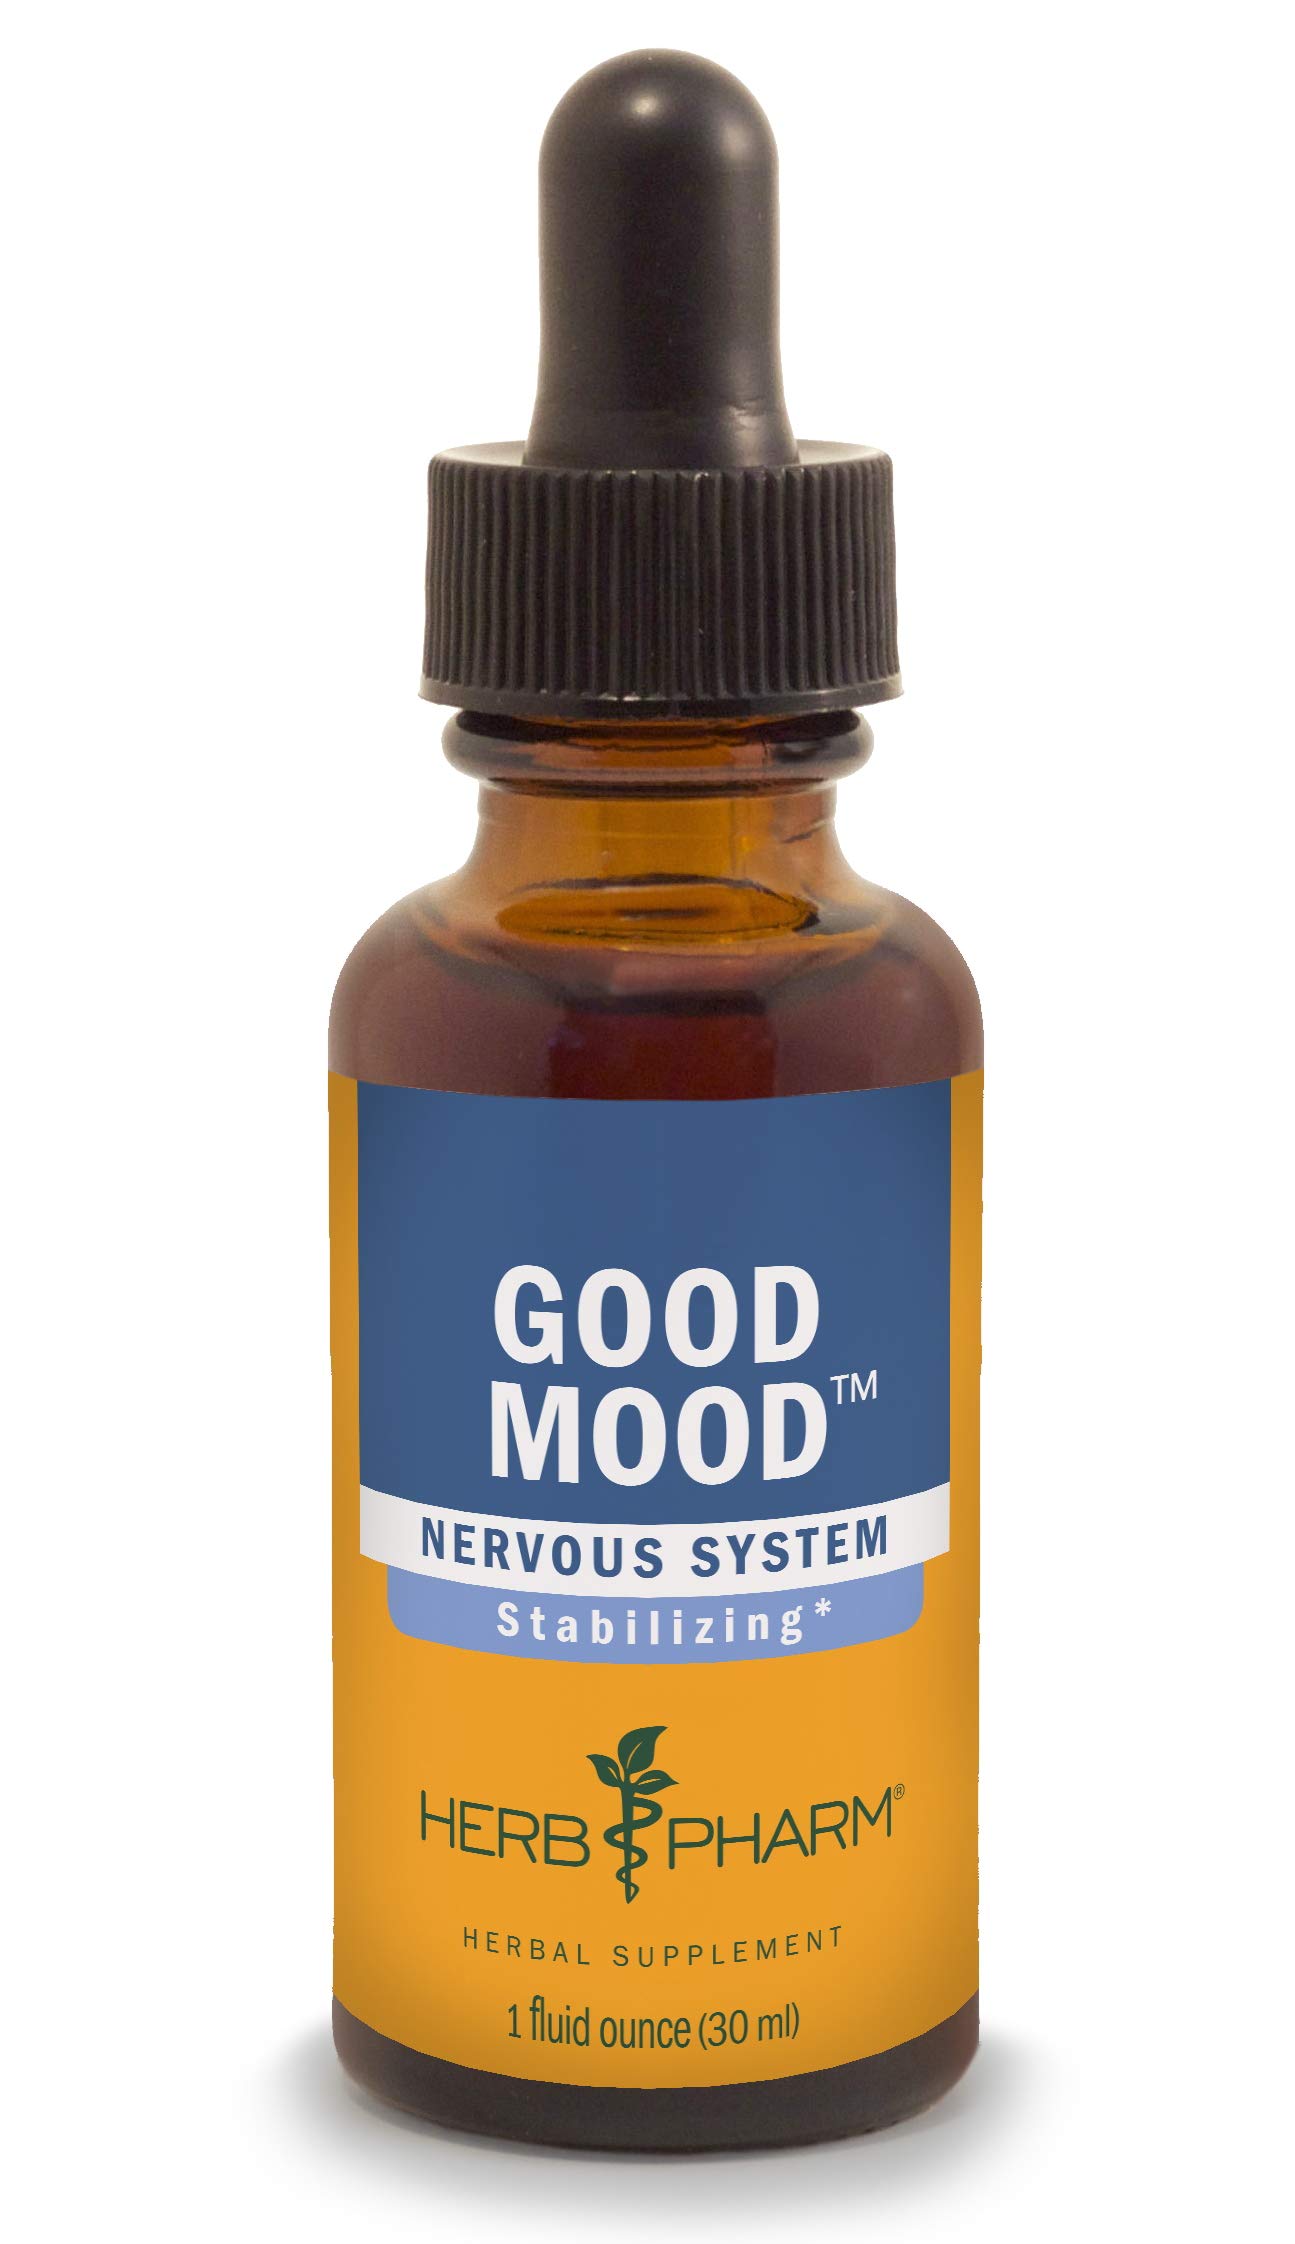 Herb Pharm Good Mood Liquid Herbal Formula with St. John's Wort for Healthy Emotional Balance - 1 Ounce